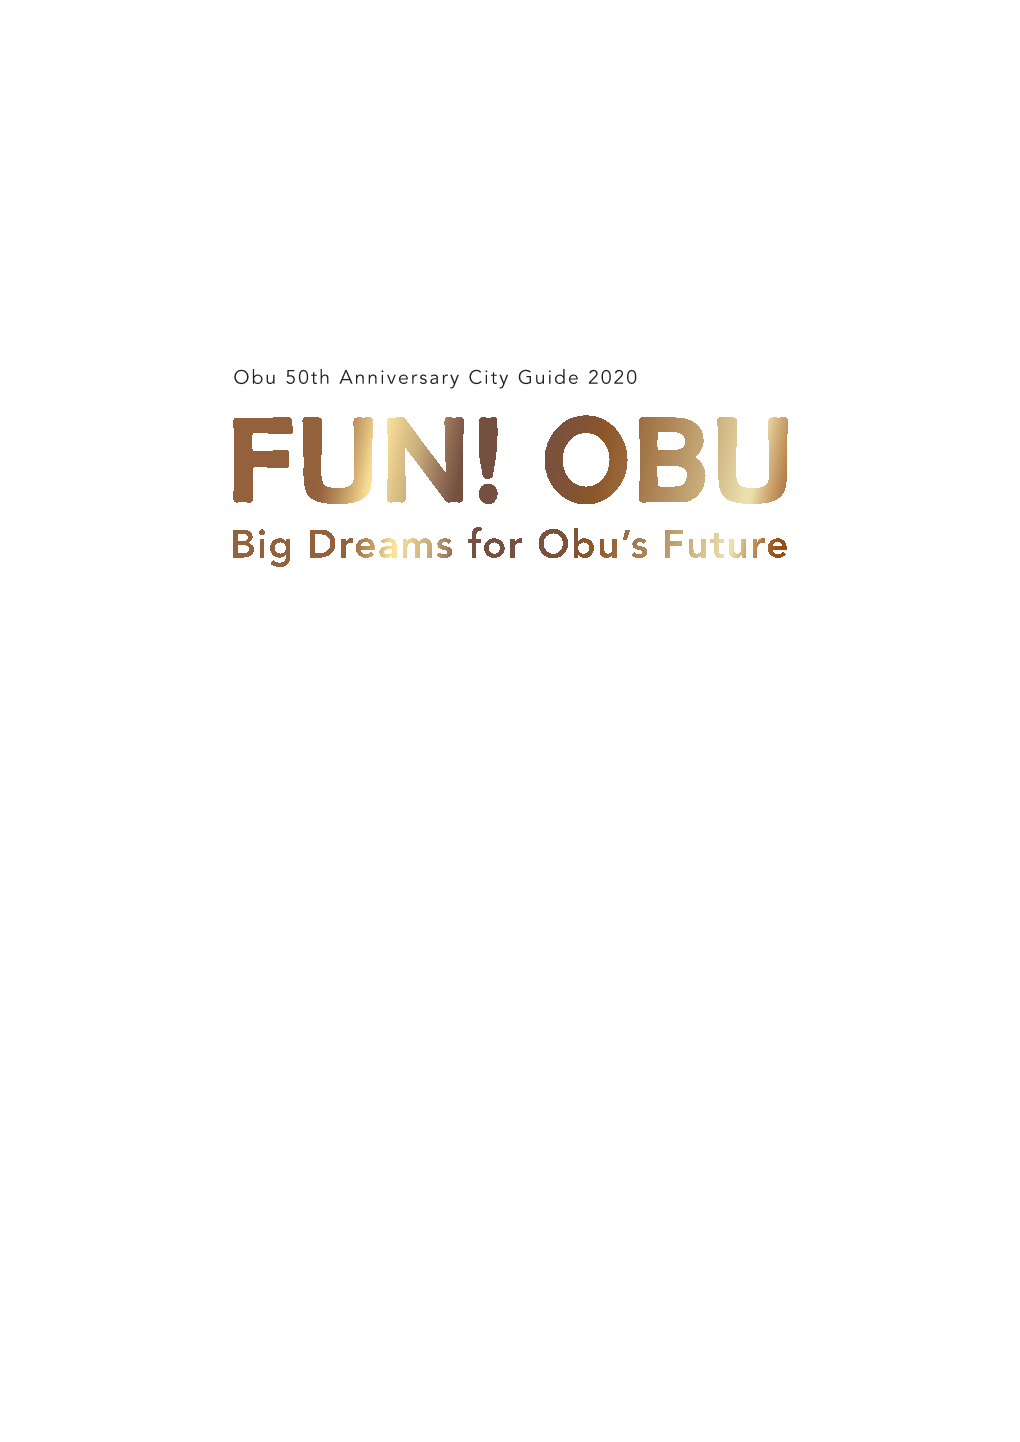 Big Dreams for Obu's Future